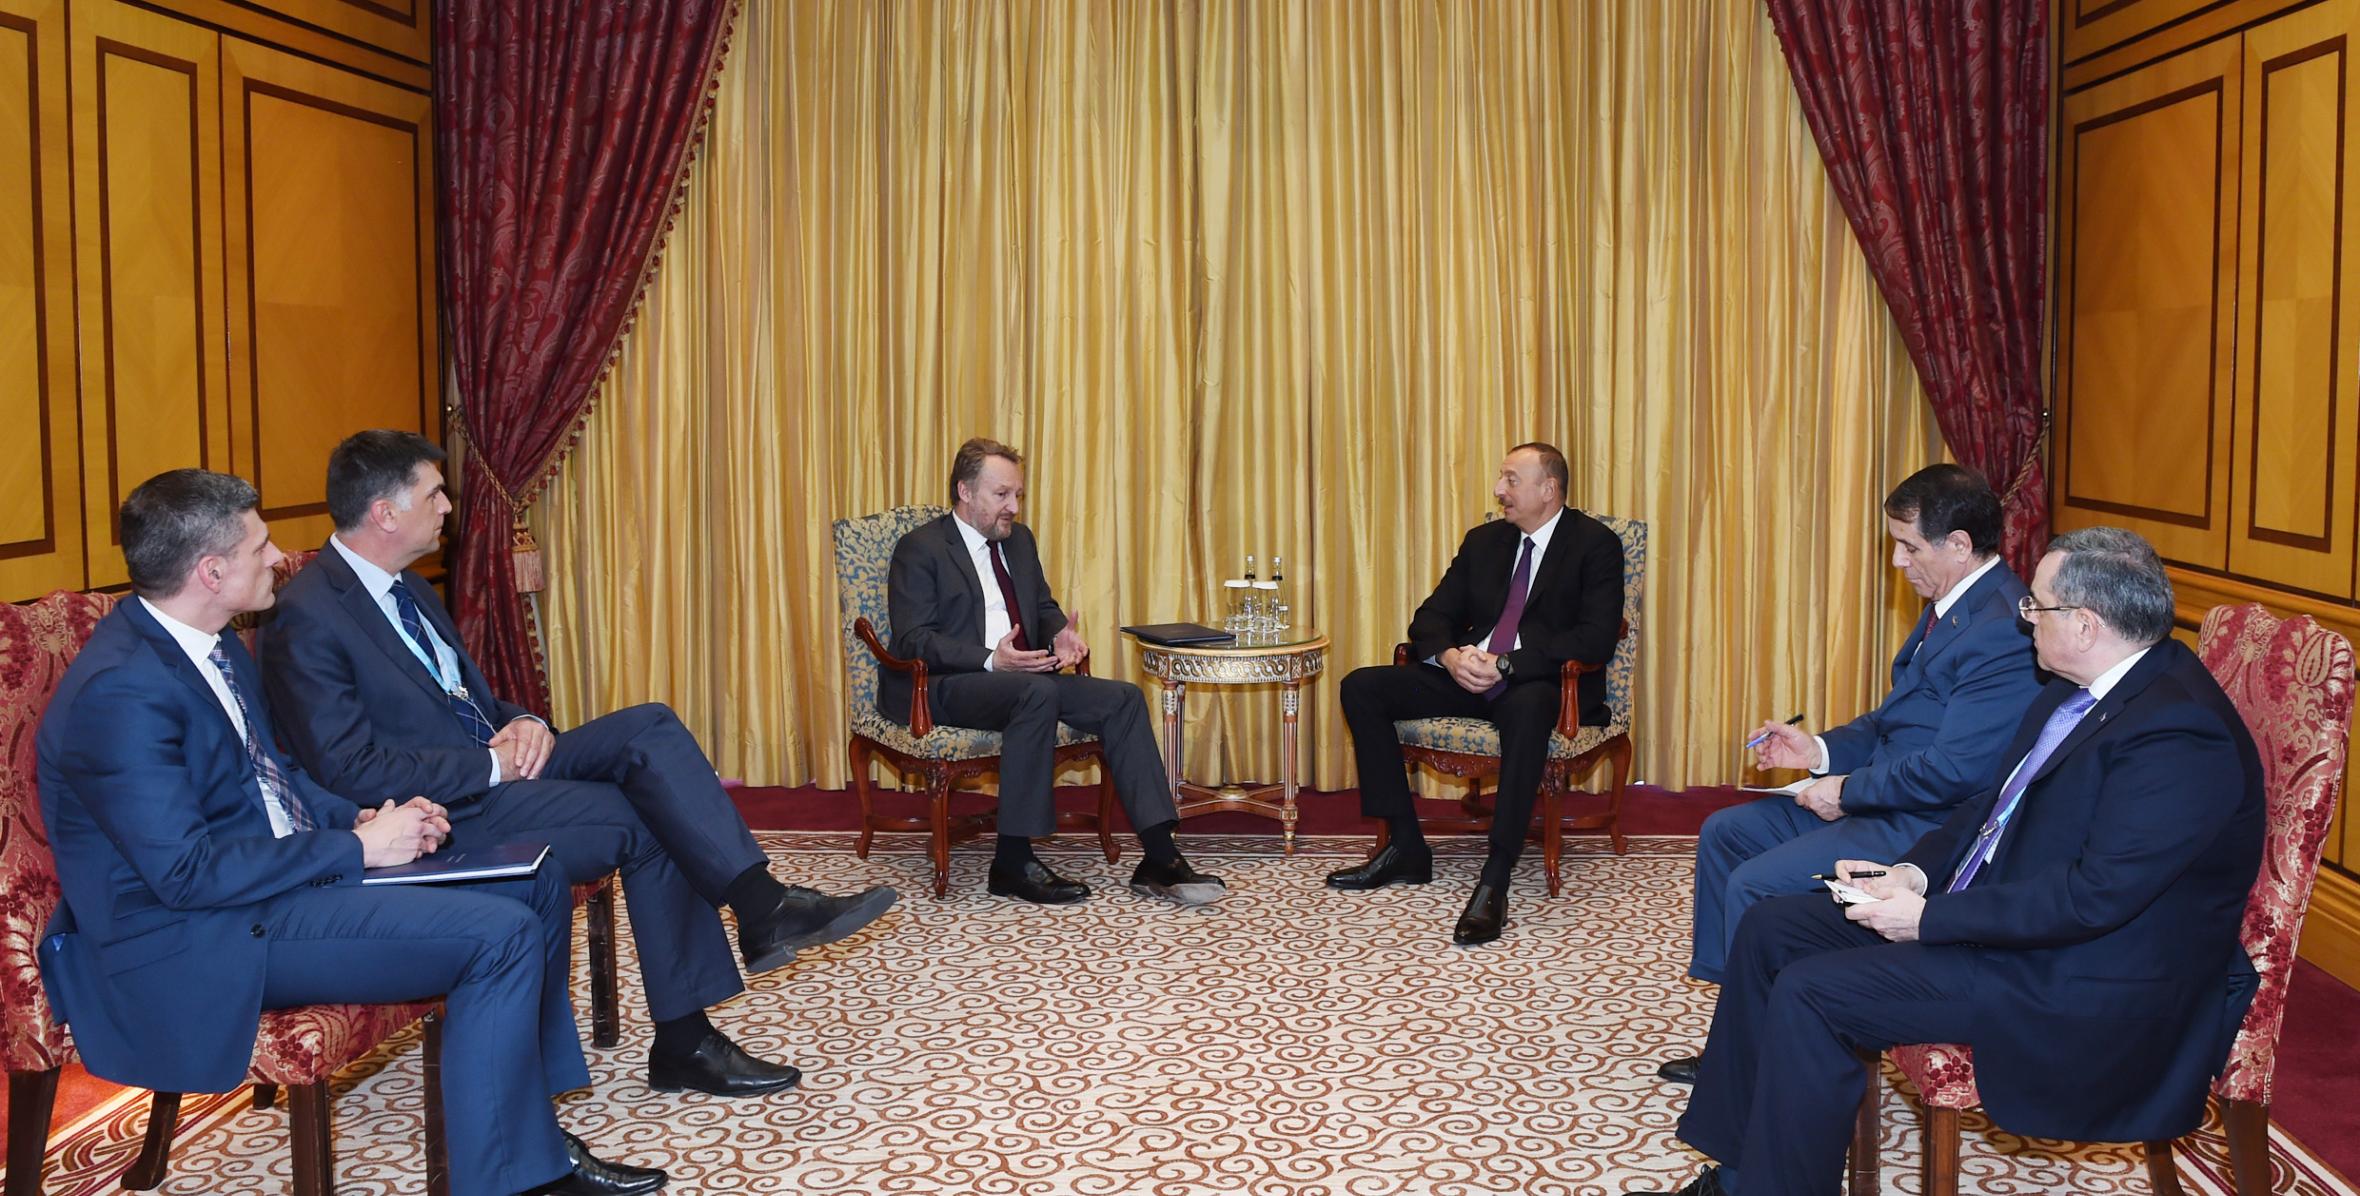 Ilham Aliyev has met with Chairman of the Presidency of Bosnia and Herzegovina Bakir Izetbegovic in Istanbul